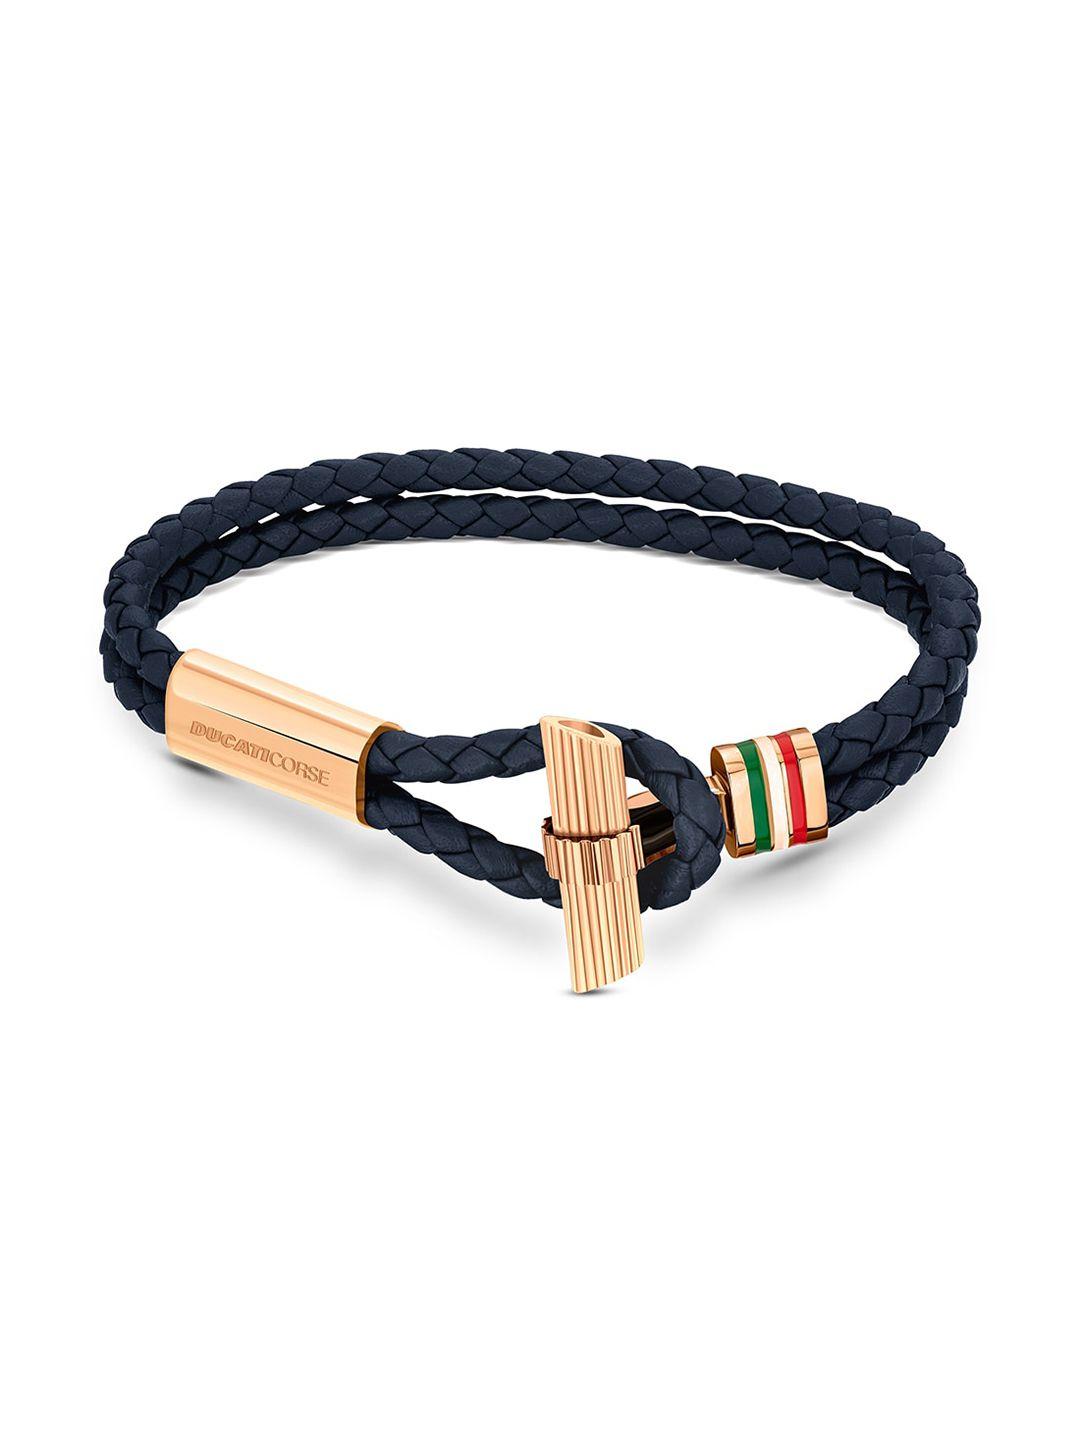 ducati corse men navy blue & gold-toned leather braided bracelet